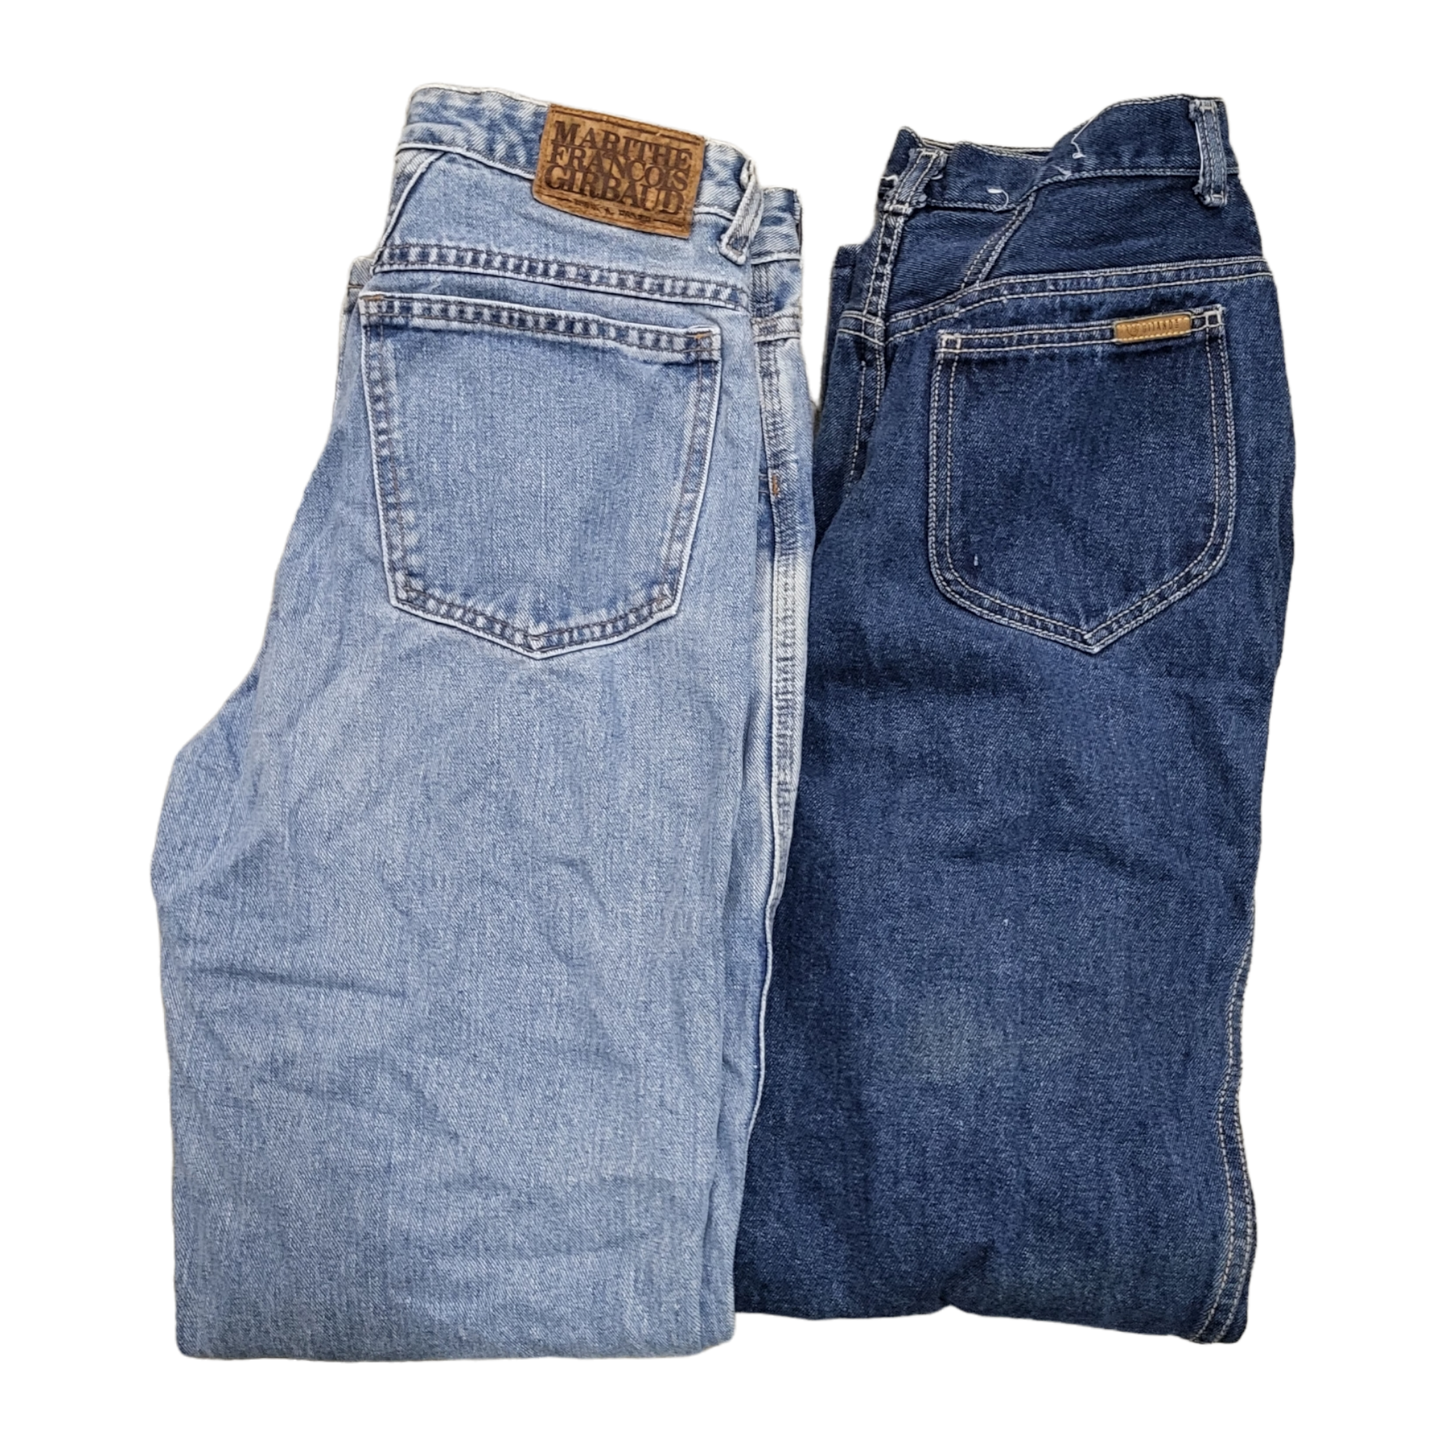 Women's Denim Jeans Intro Pack